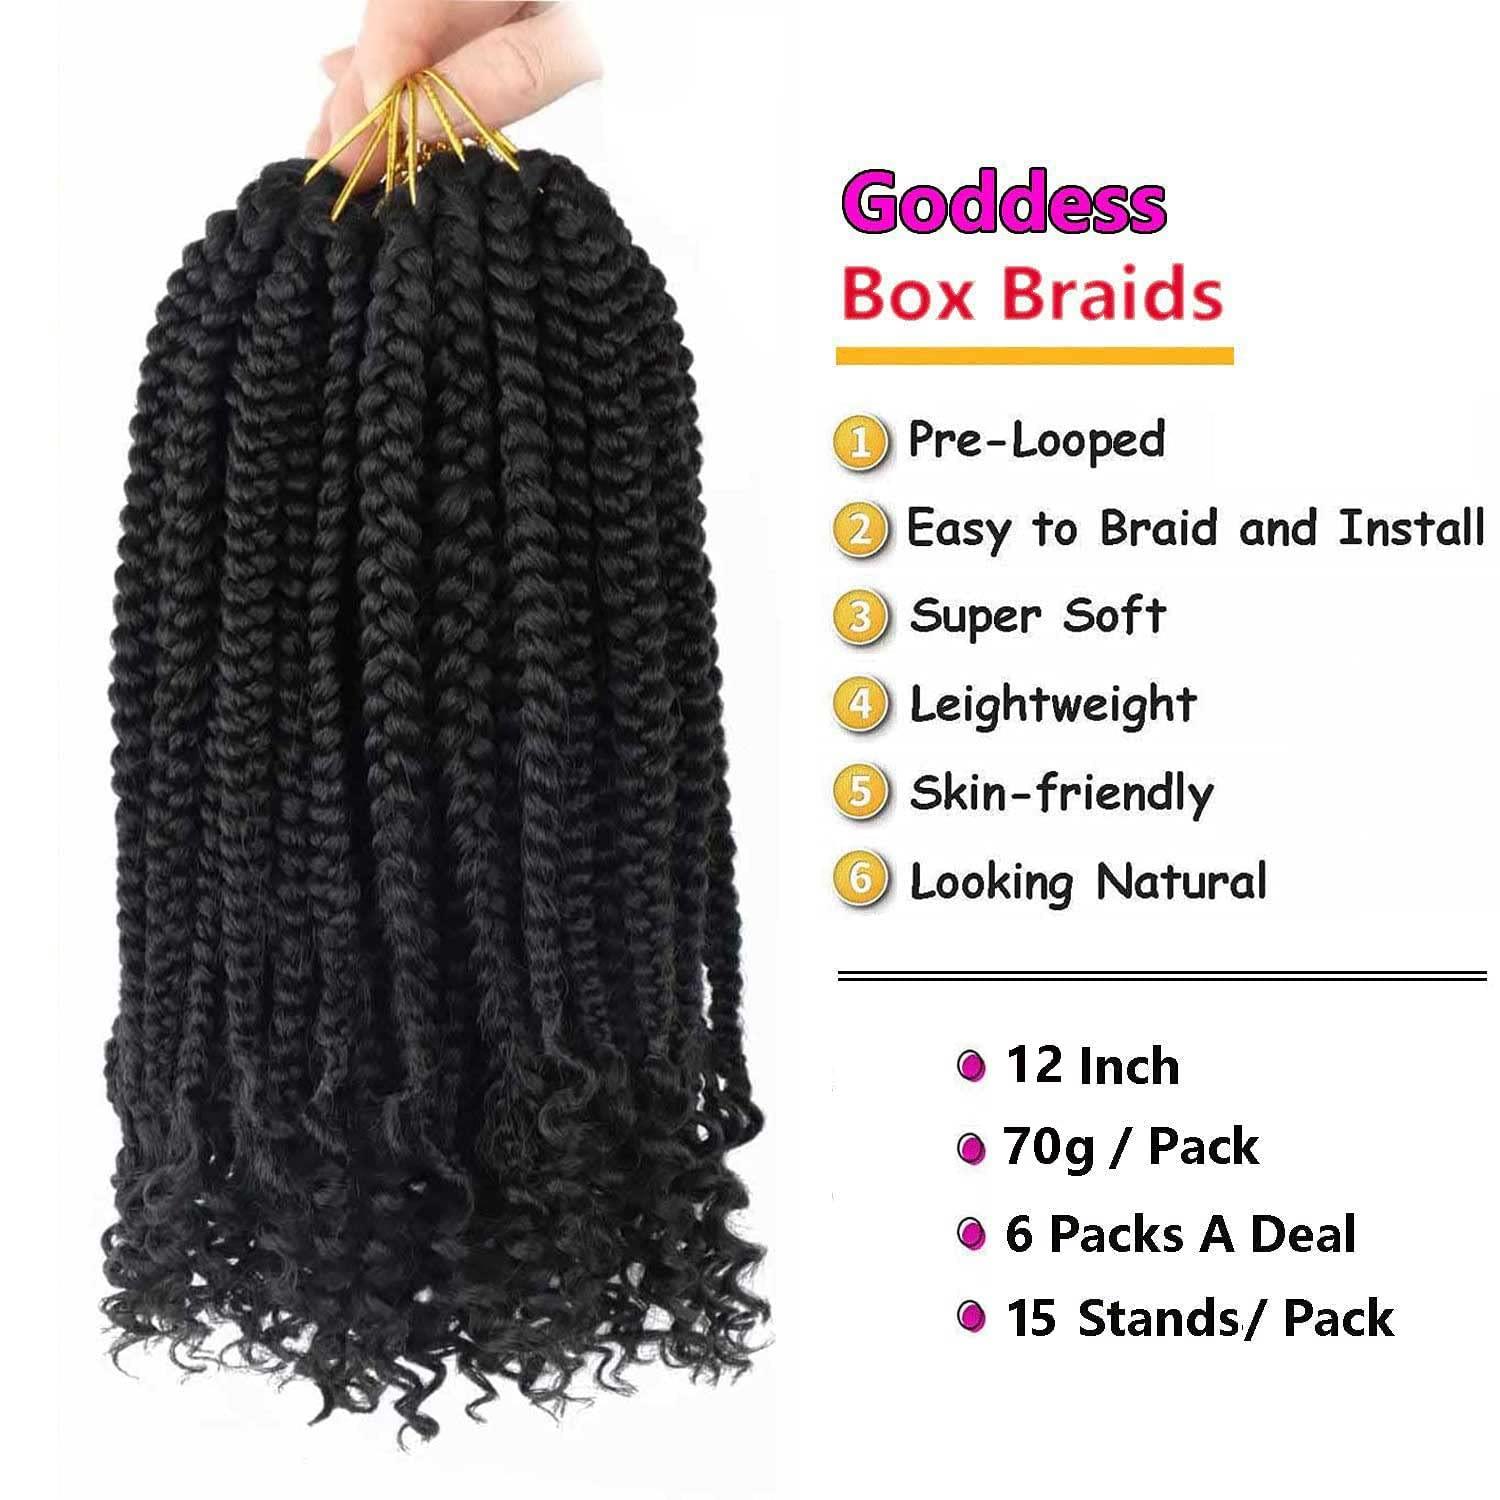 Crochet Box Braids Curly Ends